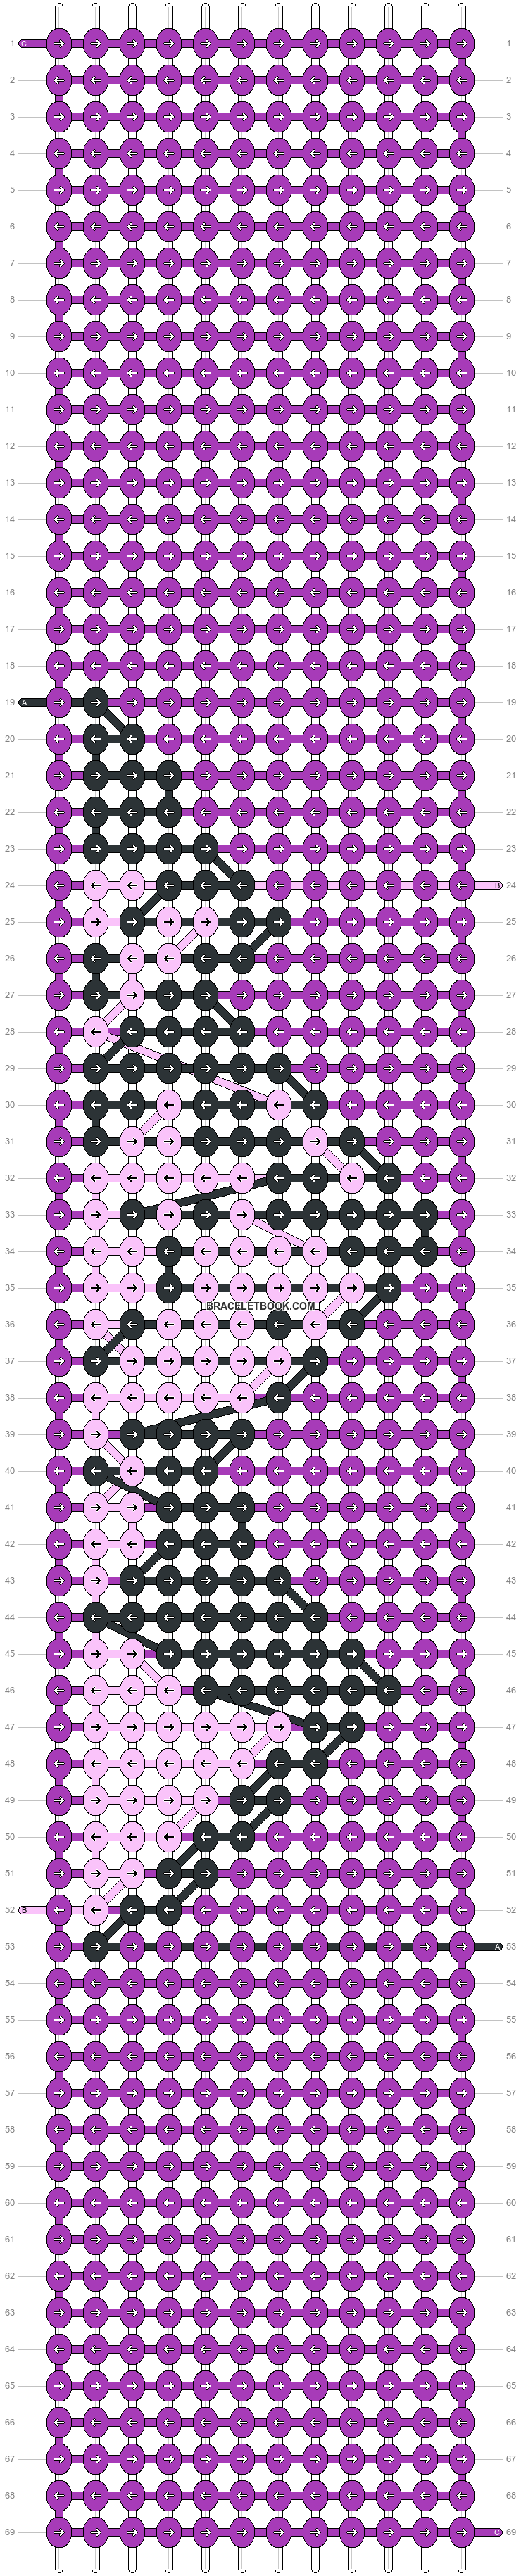 Alpha pattern #33464 variation #24235 pattern